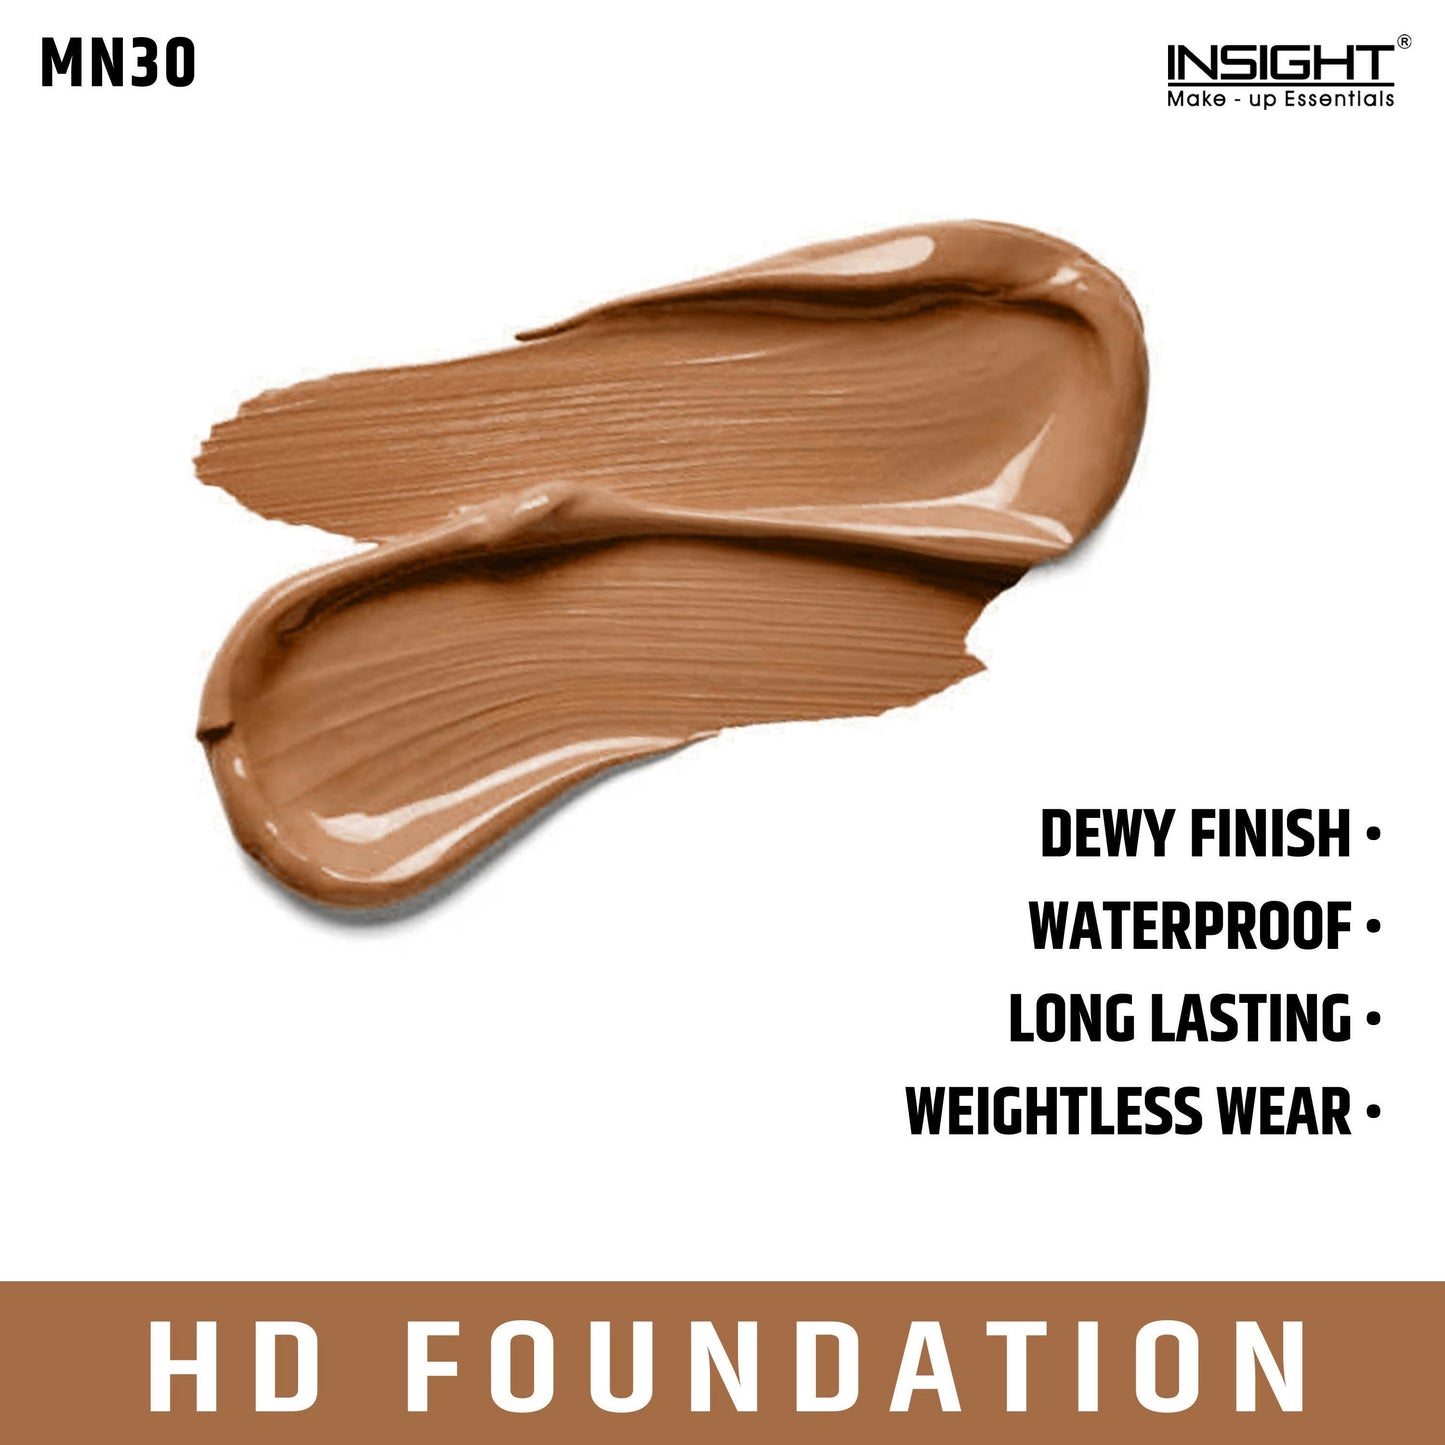 Insight Cosmetics HD Foundation - MN 30